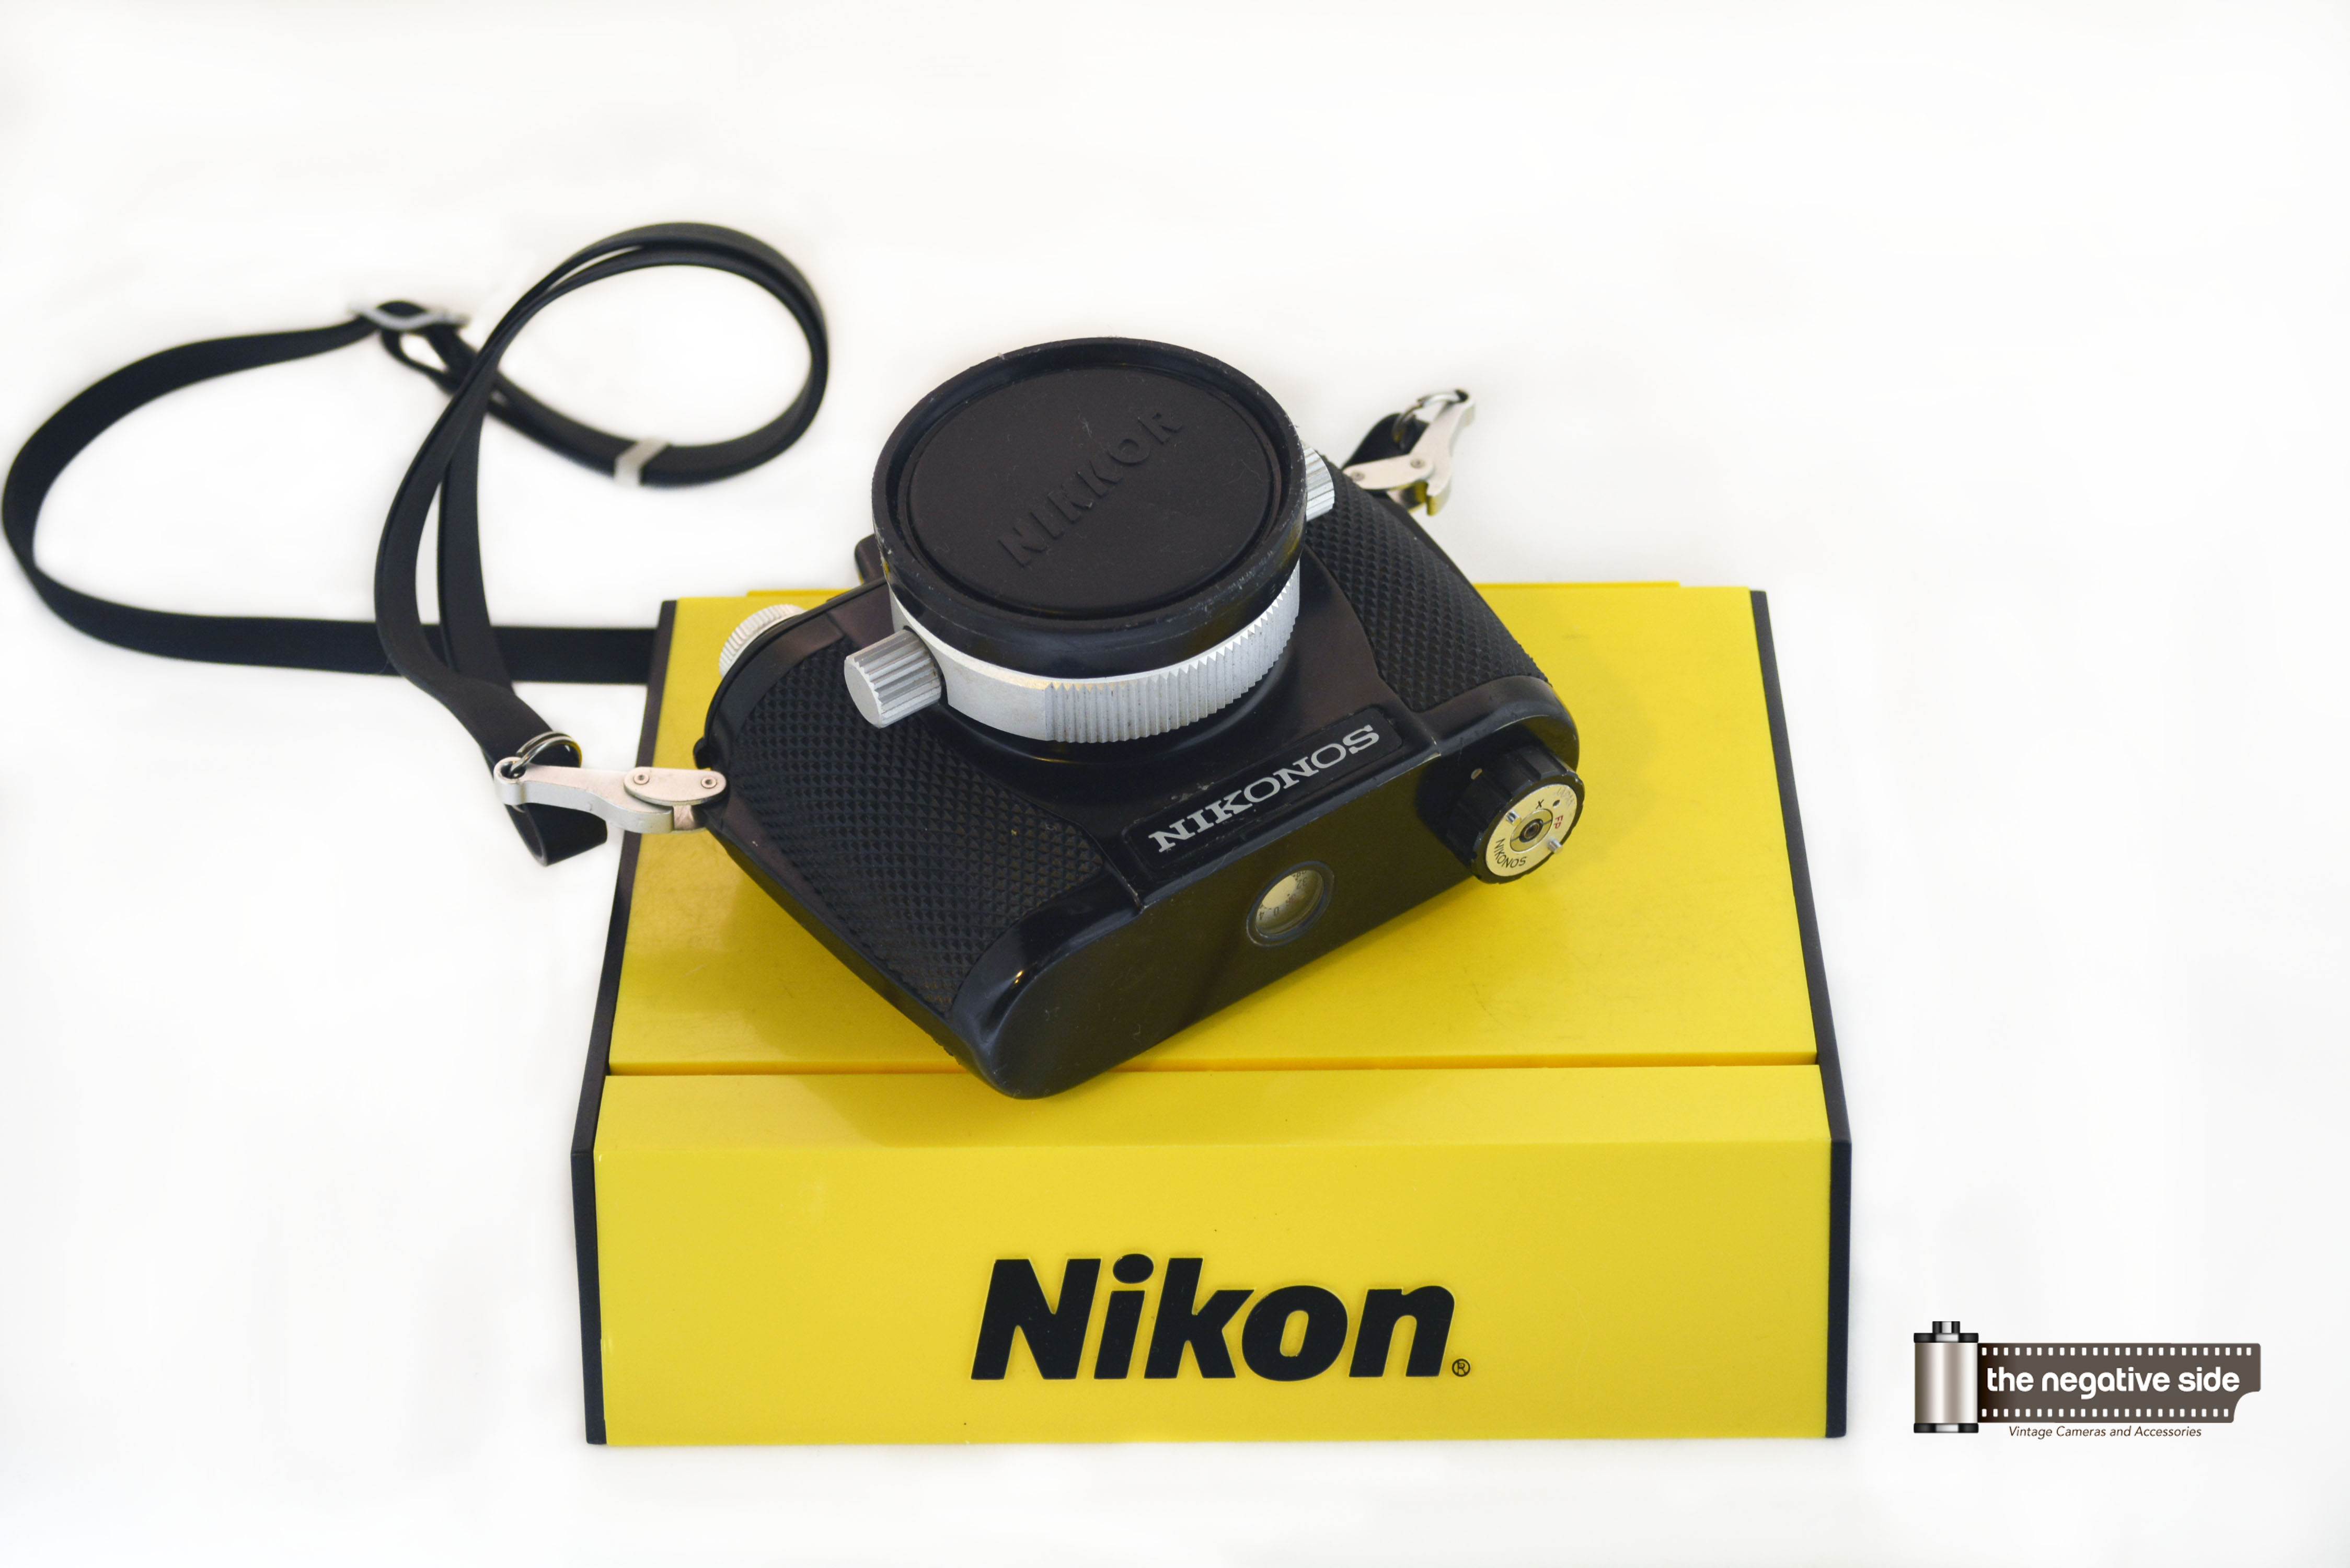 Nikon Nikonos II Underwater Camera | The Negative Side